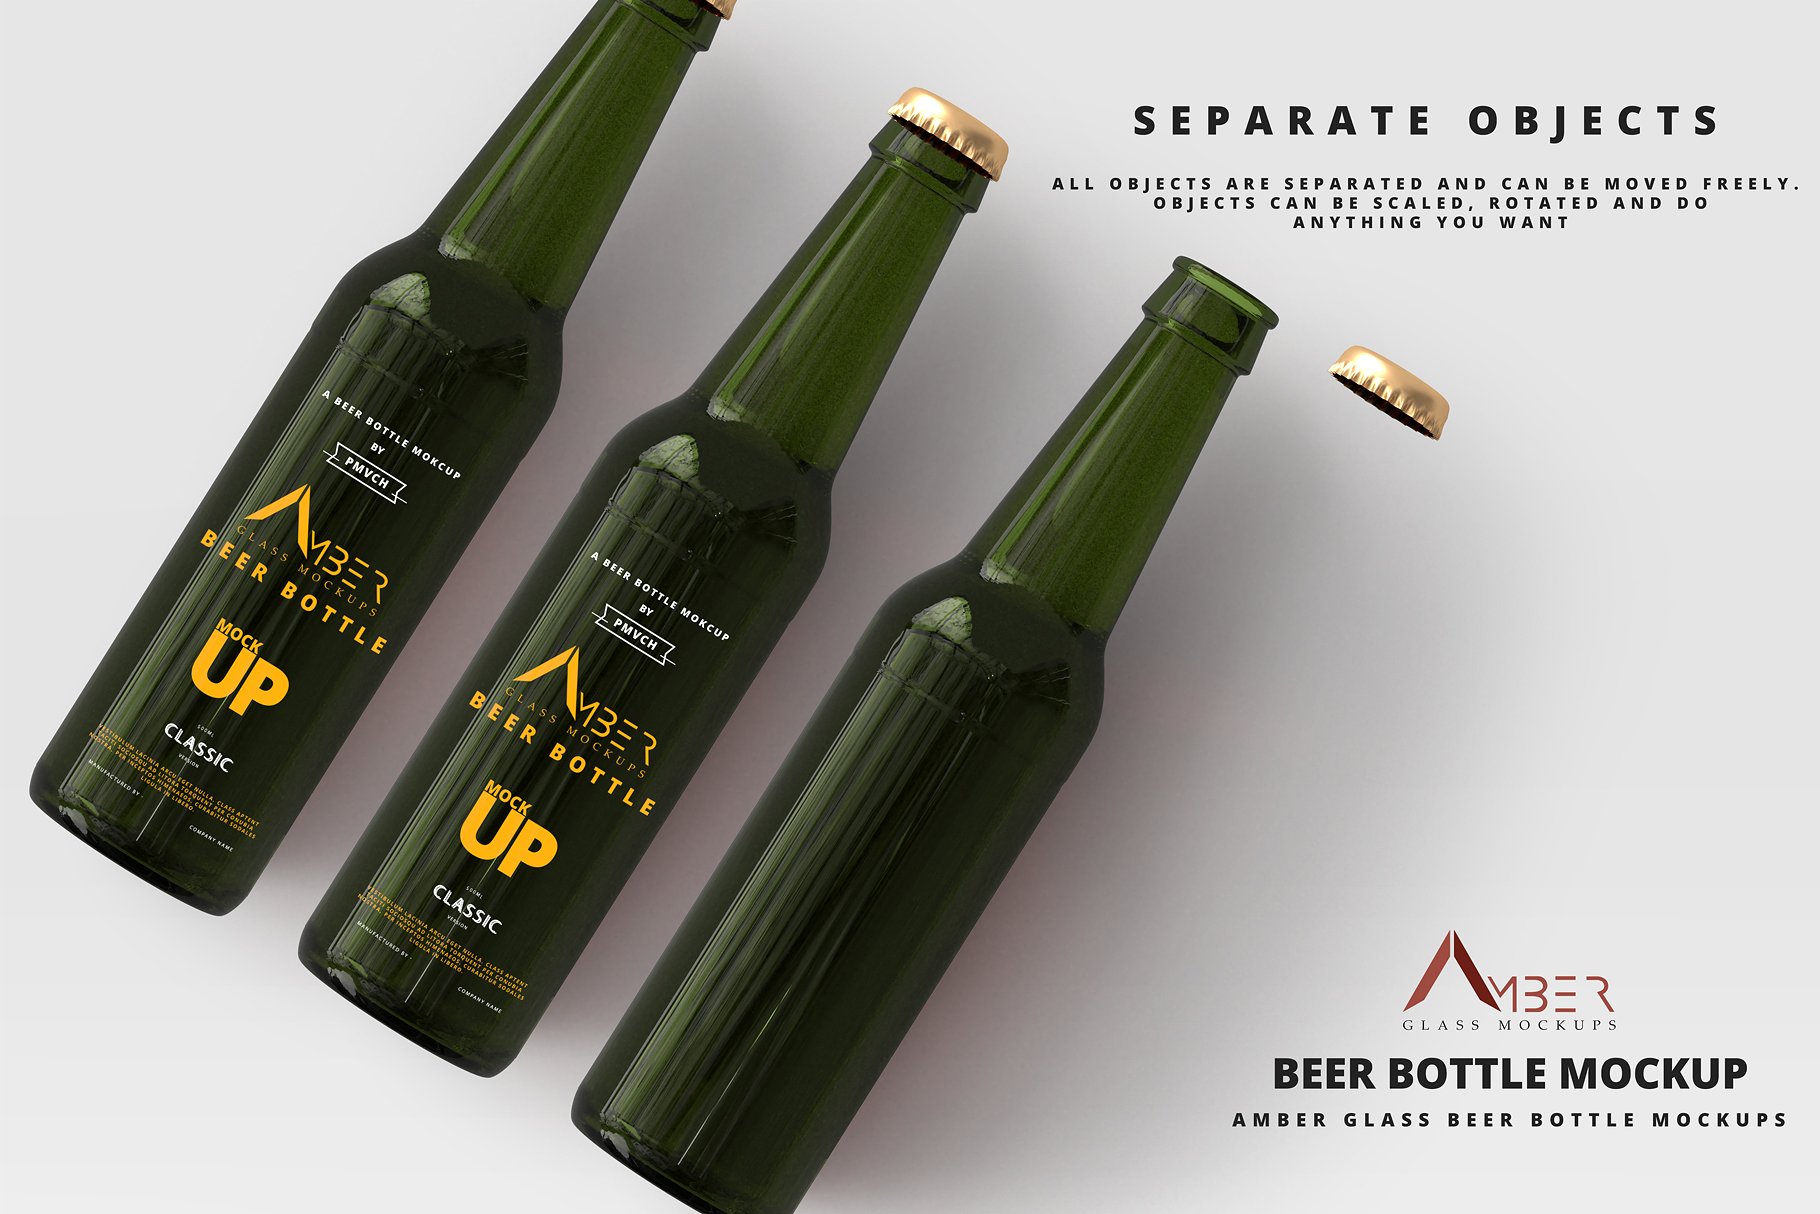 琥珀玻璃啤酒瓶样机 Amber Glass Beer Bottle Mockup插图4